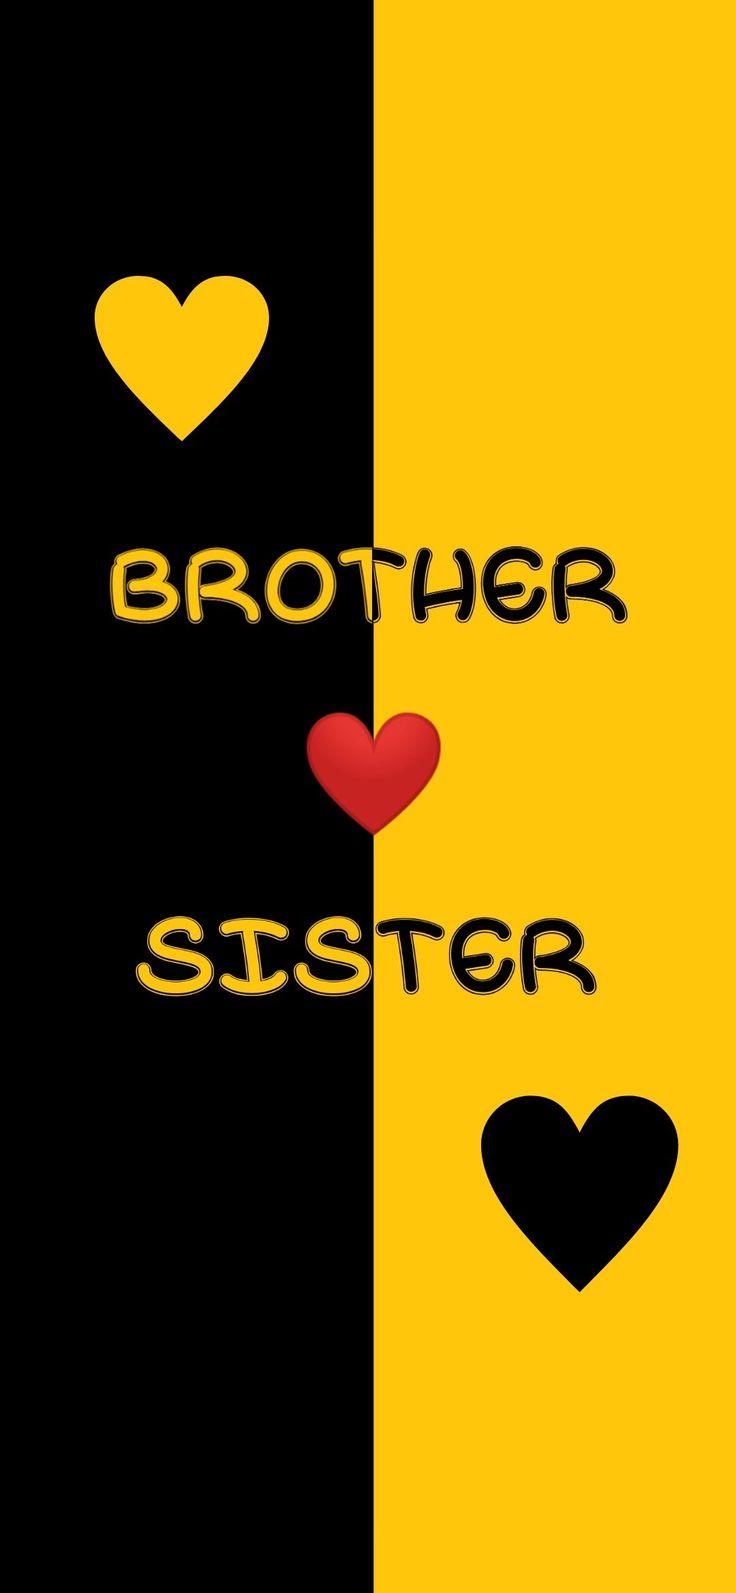 Brother Sister wallpaper by Jadaun Editz Sister wallpaper